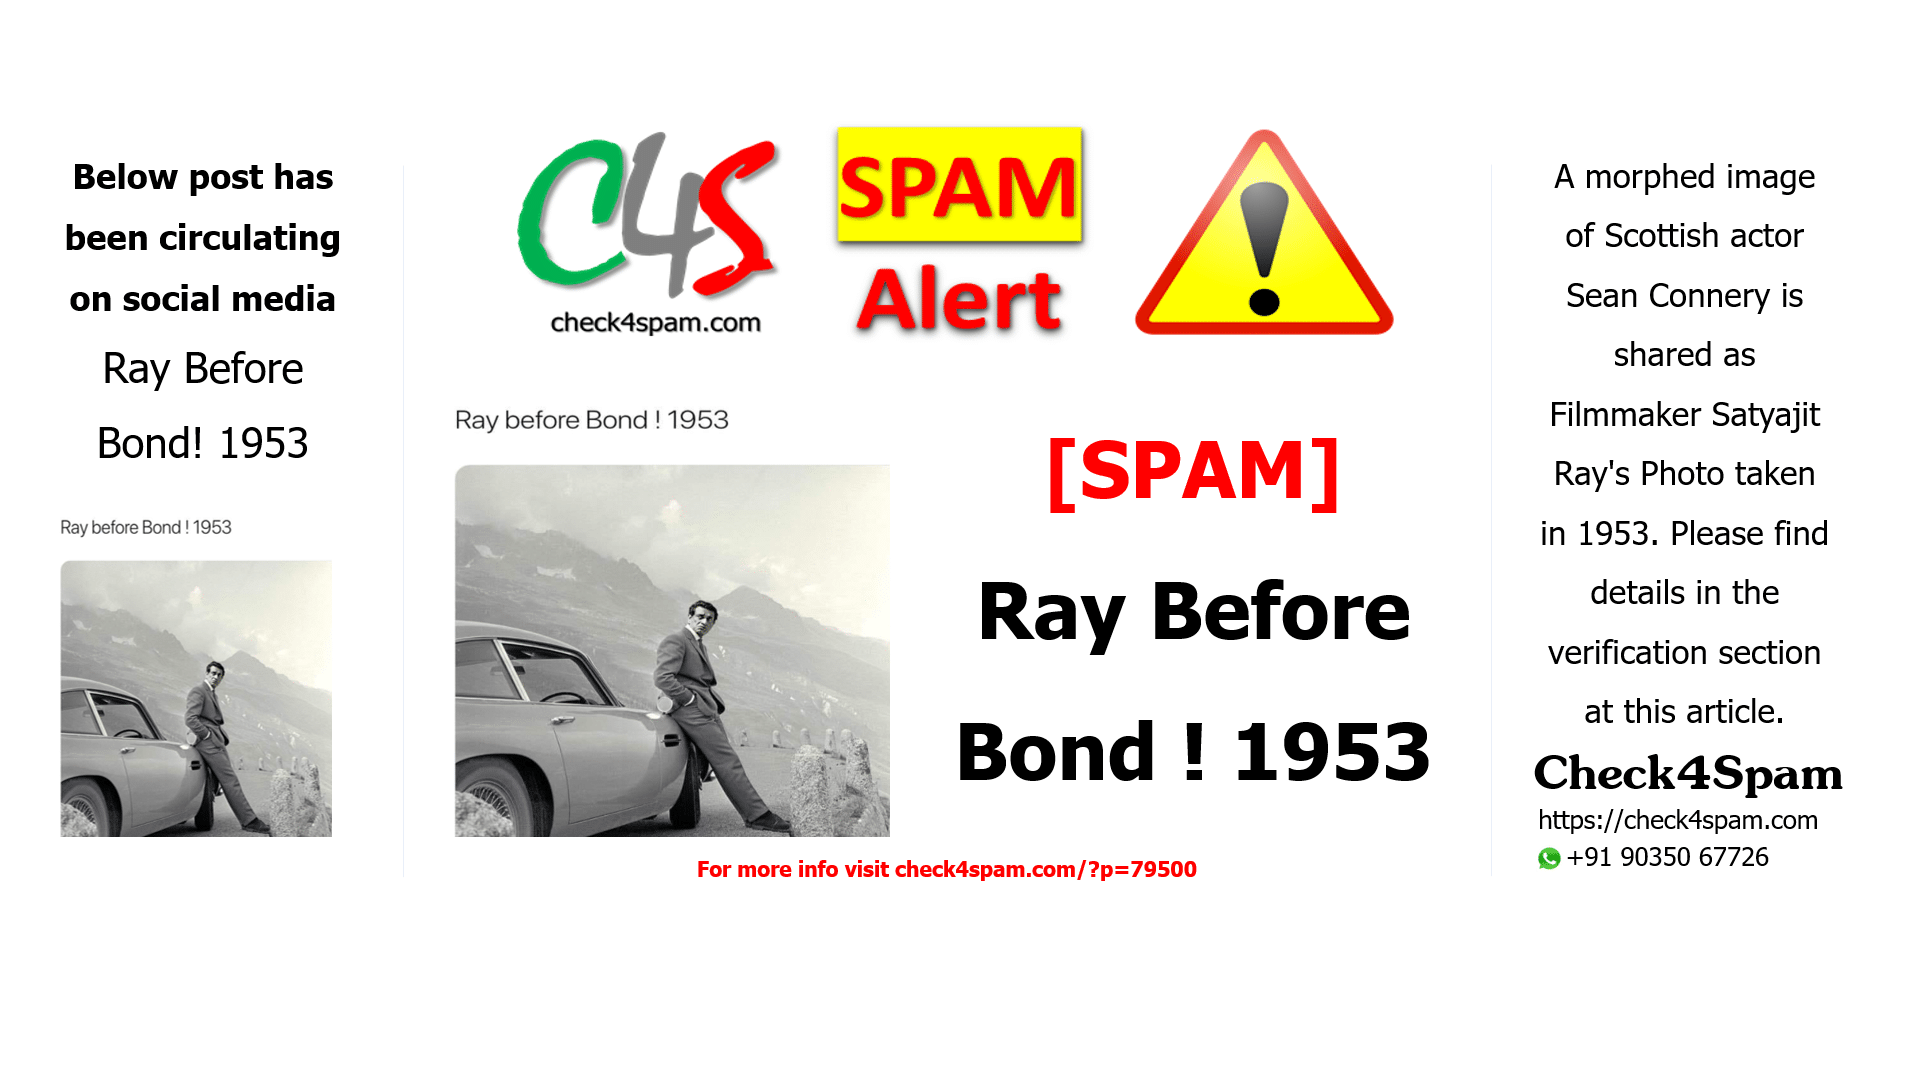 Ray Before Bond! 1953